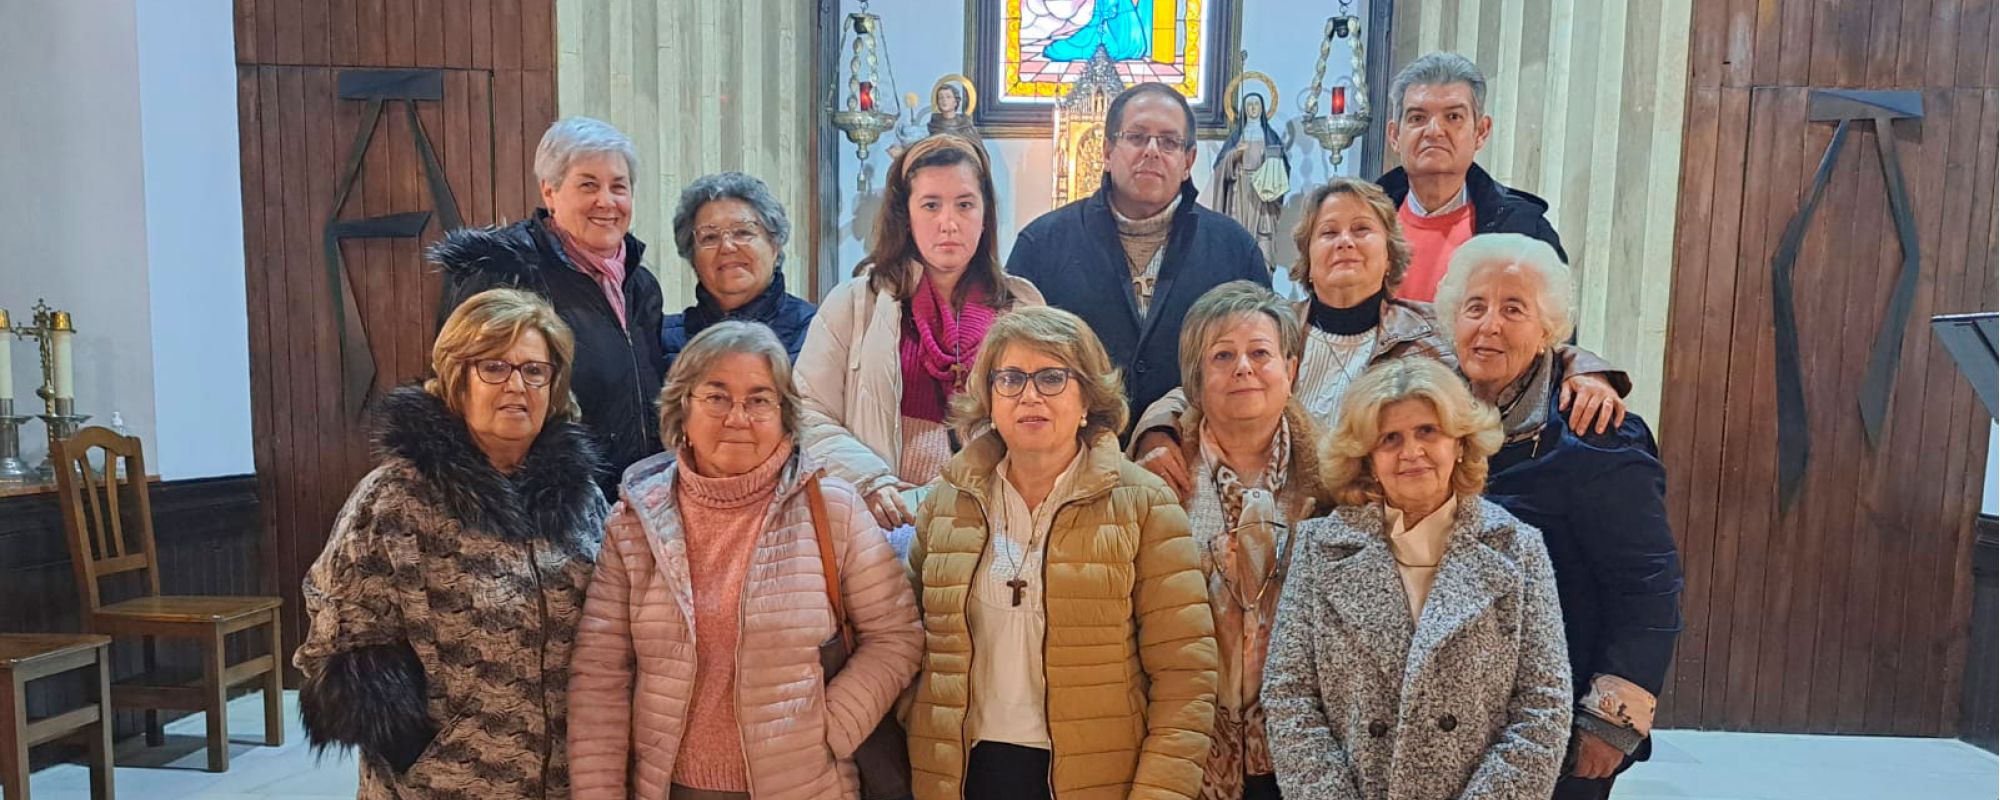 Fraternidad de la O.F.S. “Madre de Dios” de Lucena (Córdoba)